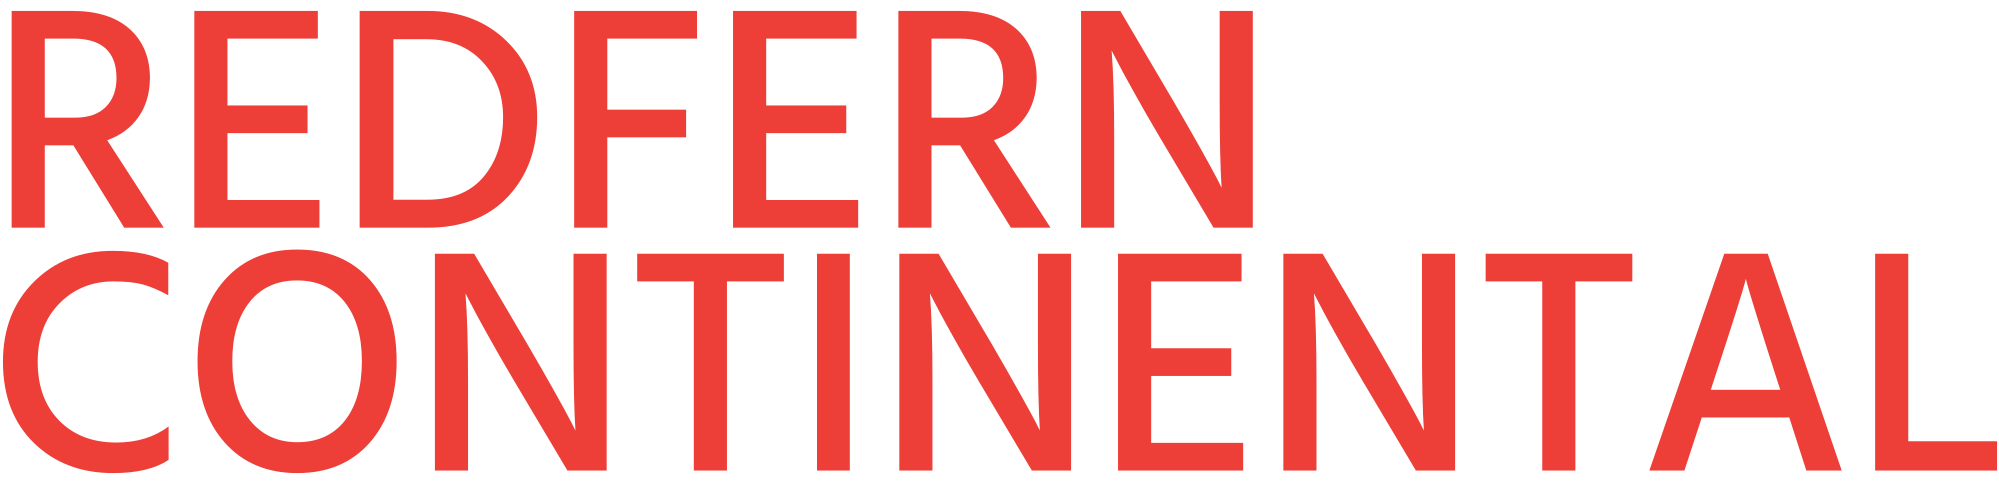 Redfern Continental Logo